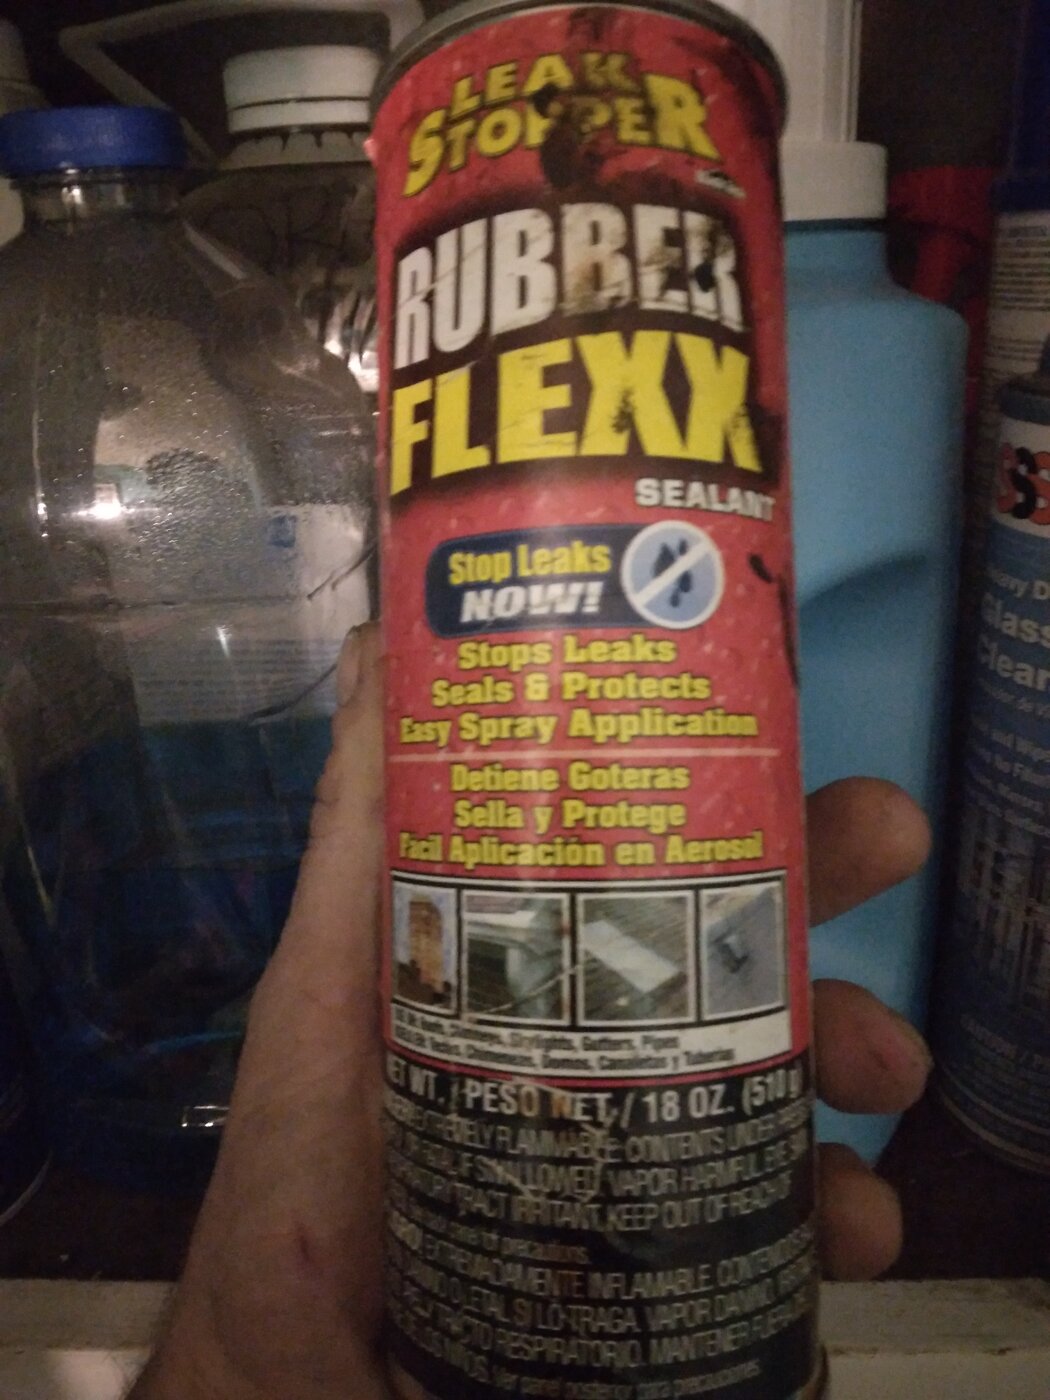 Leak Stopper 10 oz Rubber Flexx Clear Sealant